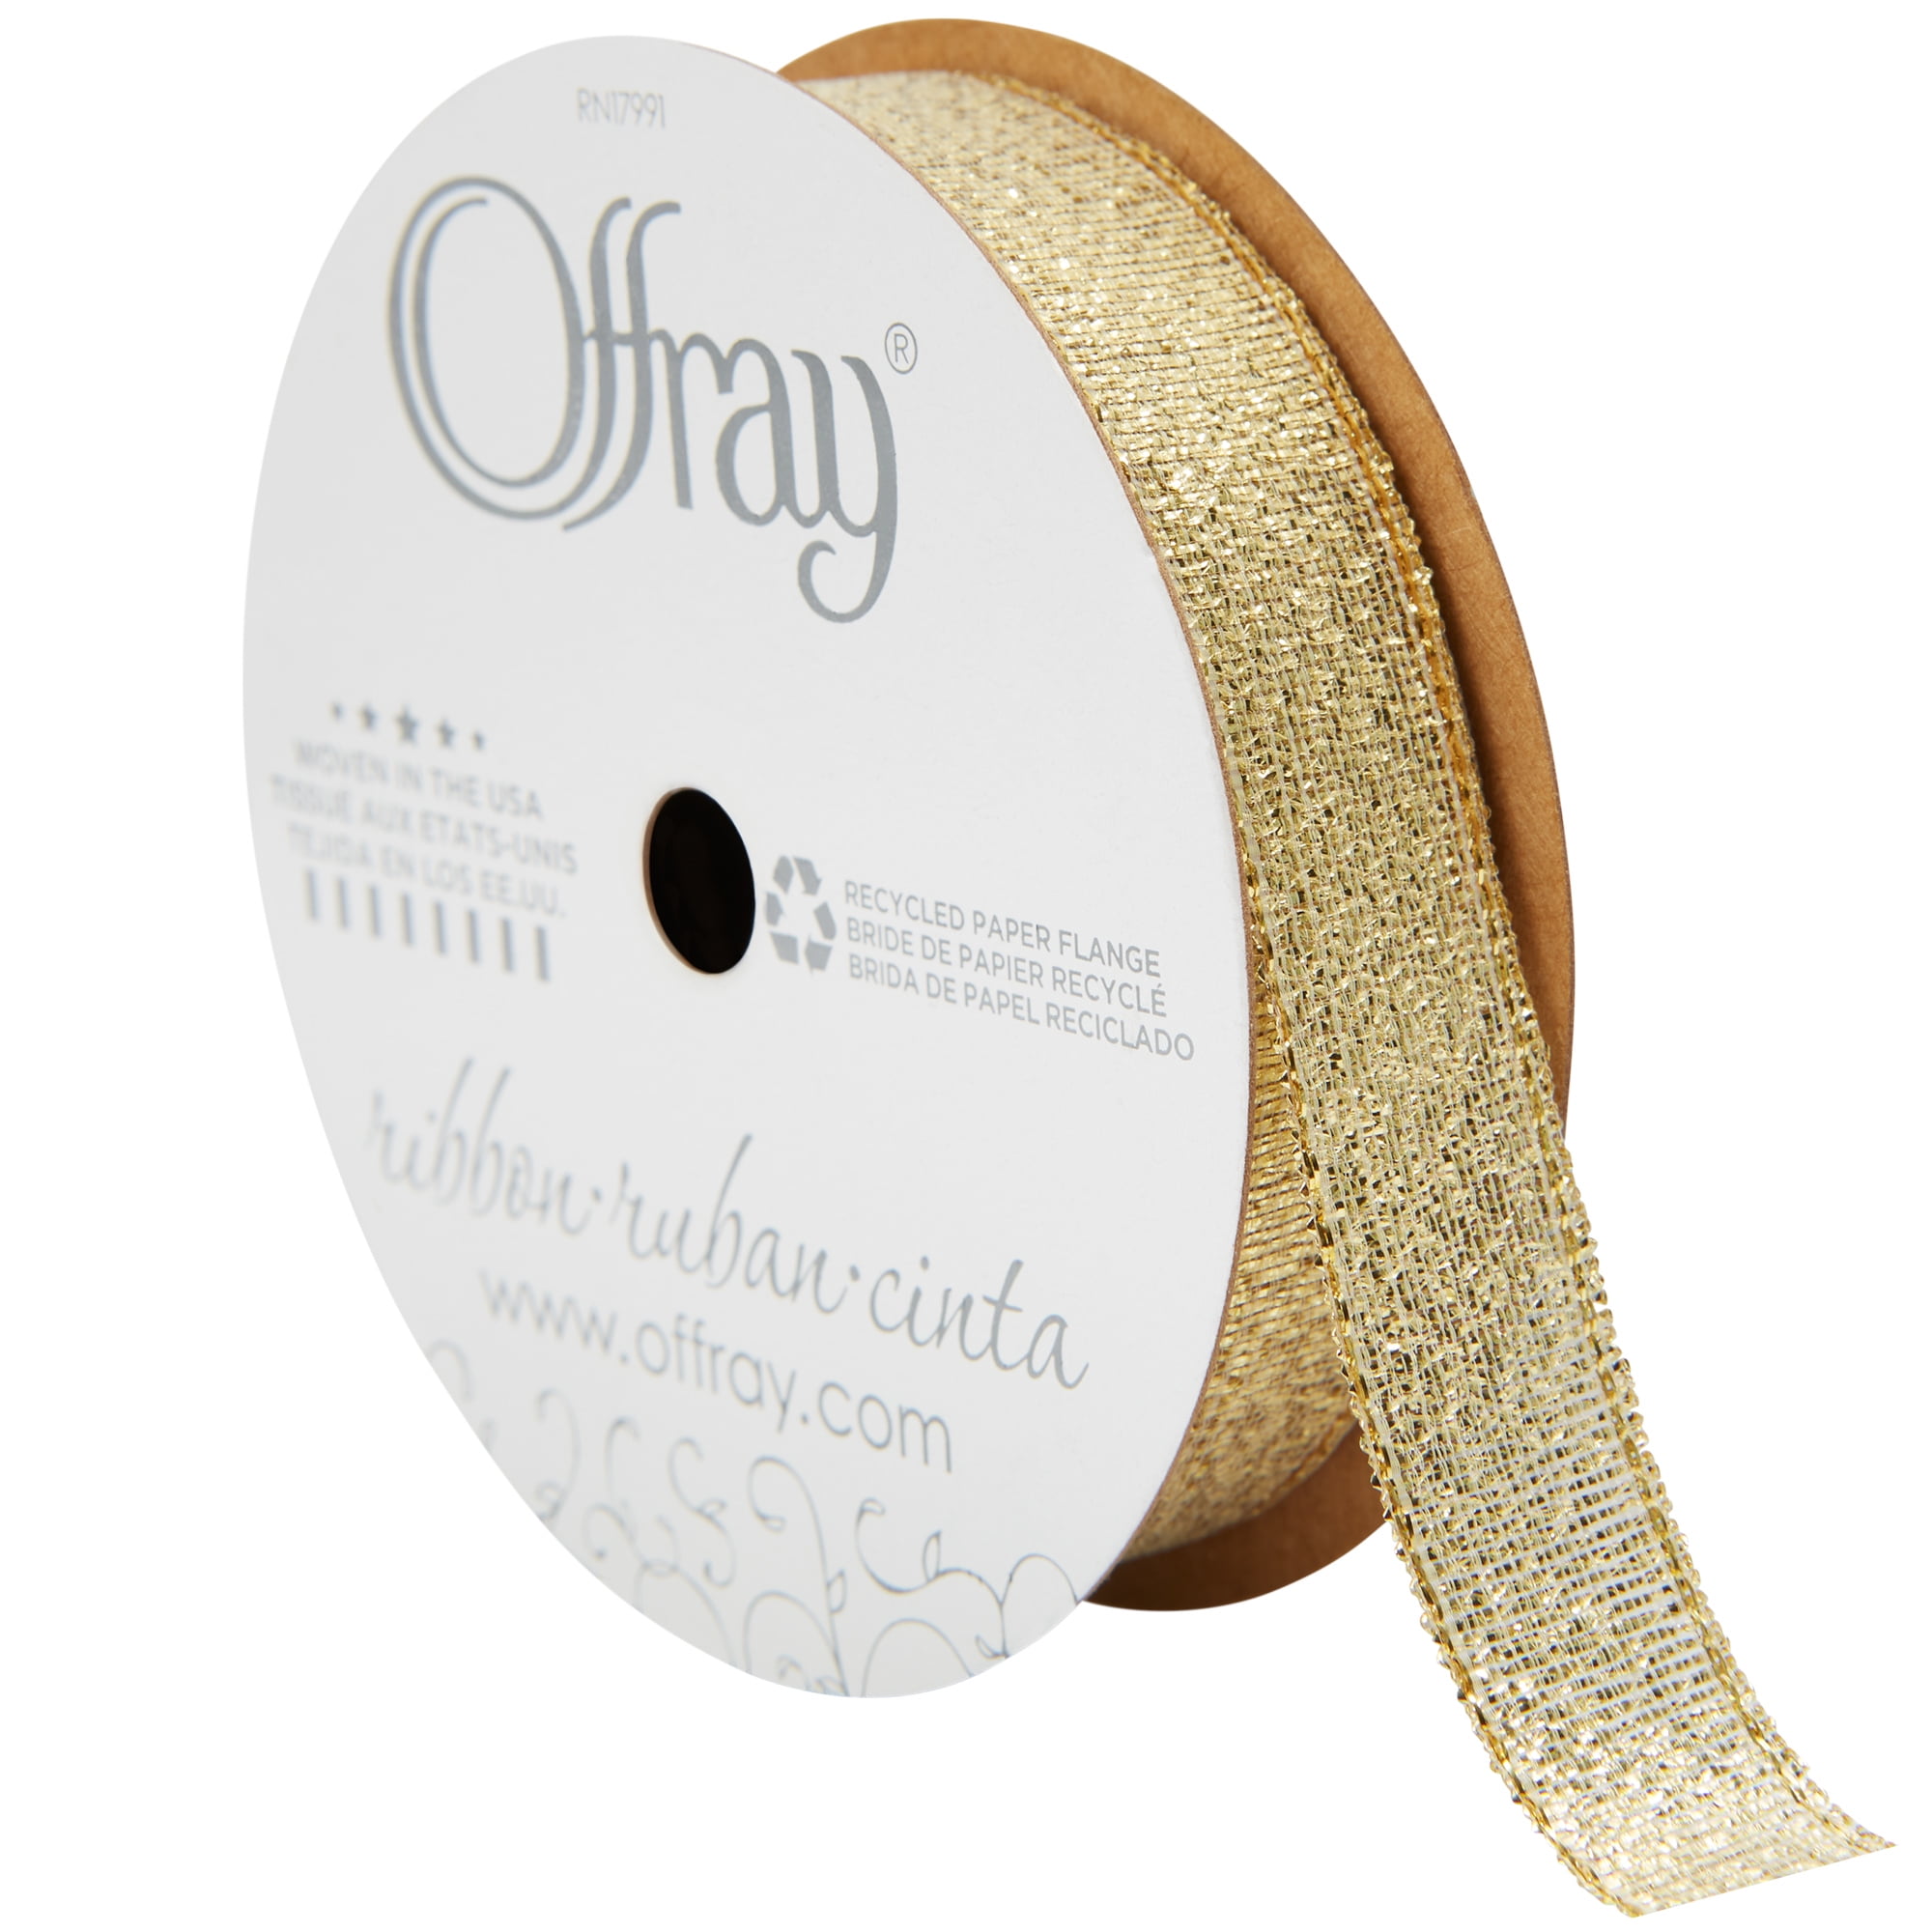 Offray Ribbon, Gold 5/8 inch Galena Metallic Ribbon, 12 feet